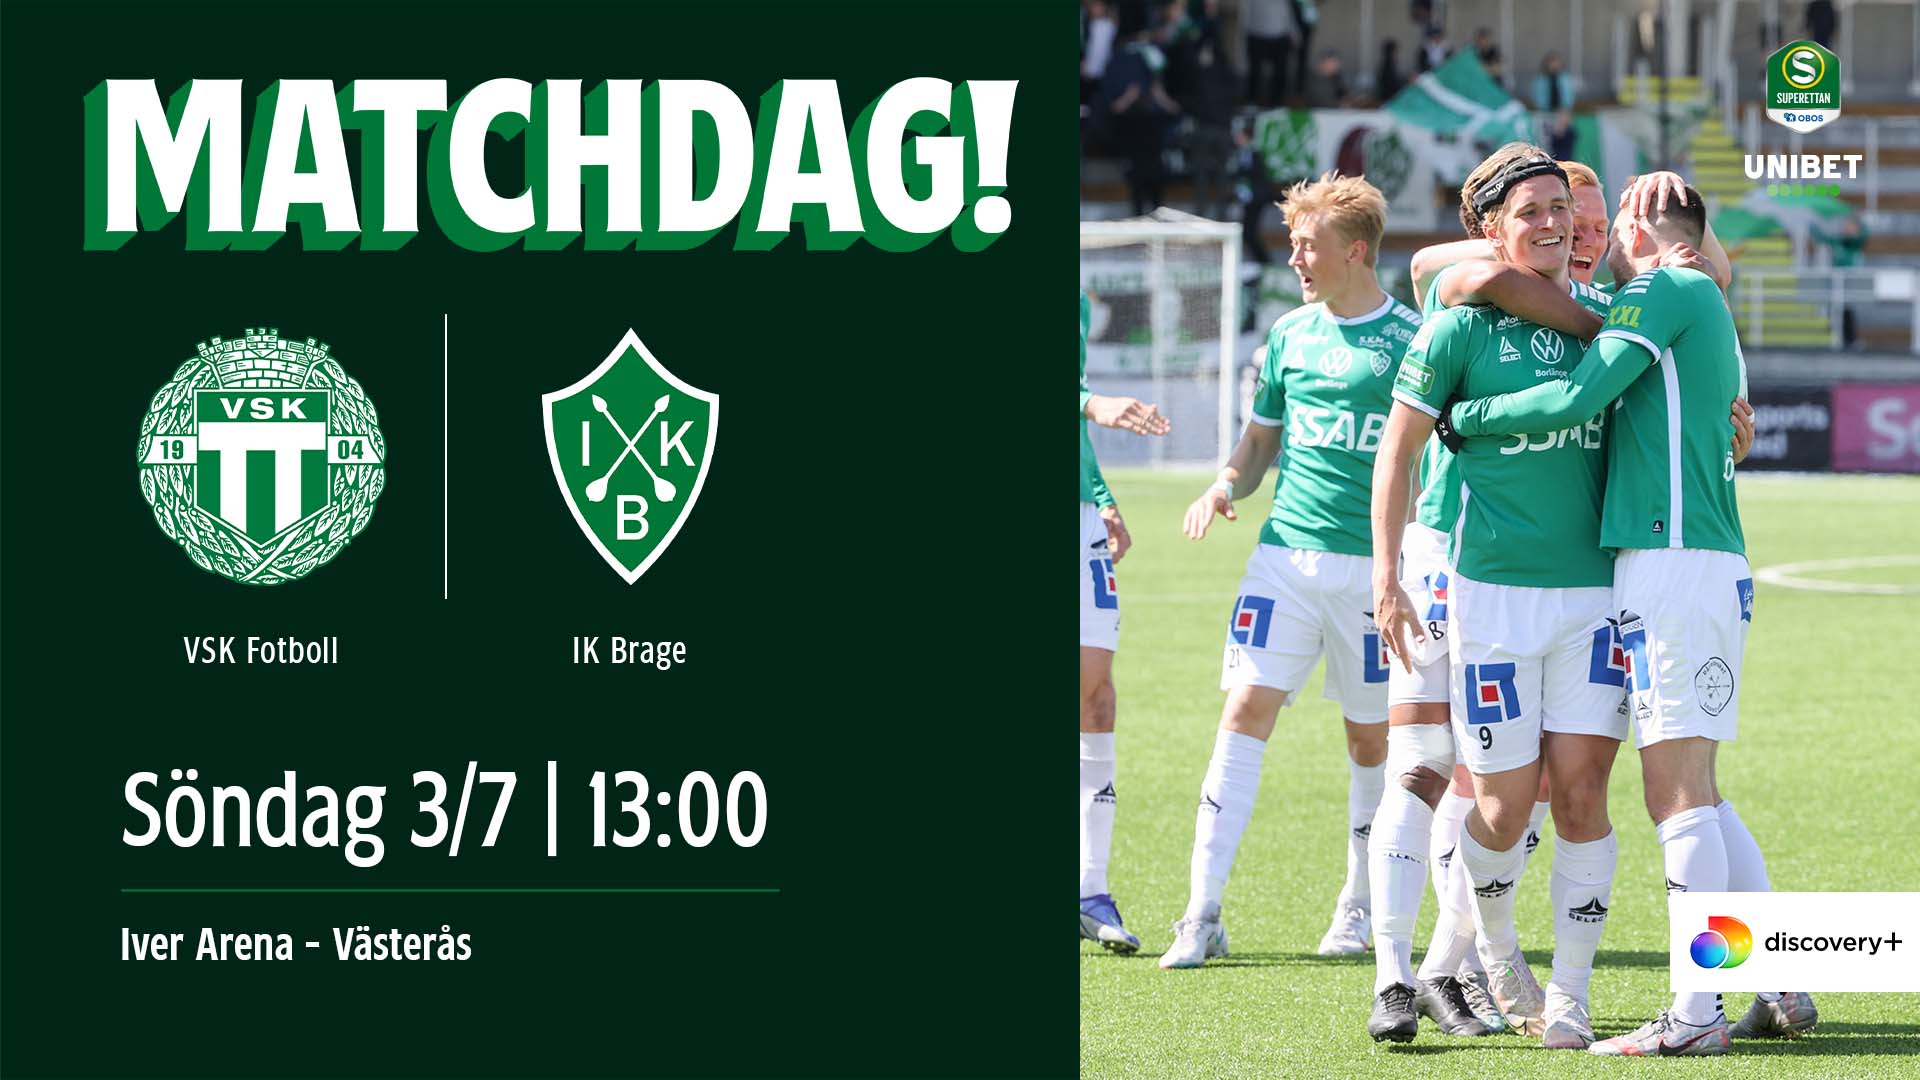 Matchdag: VSK Fotboll - IK Brage